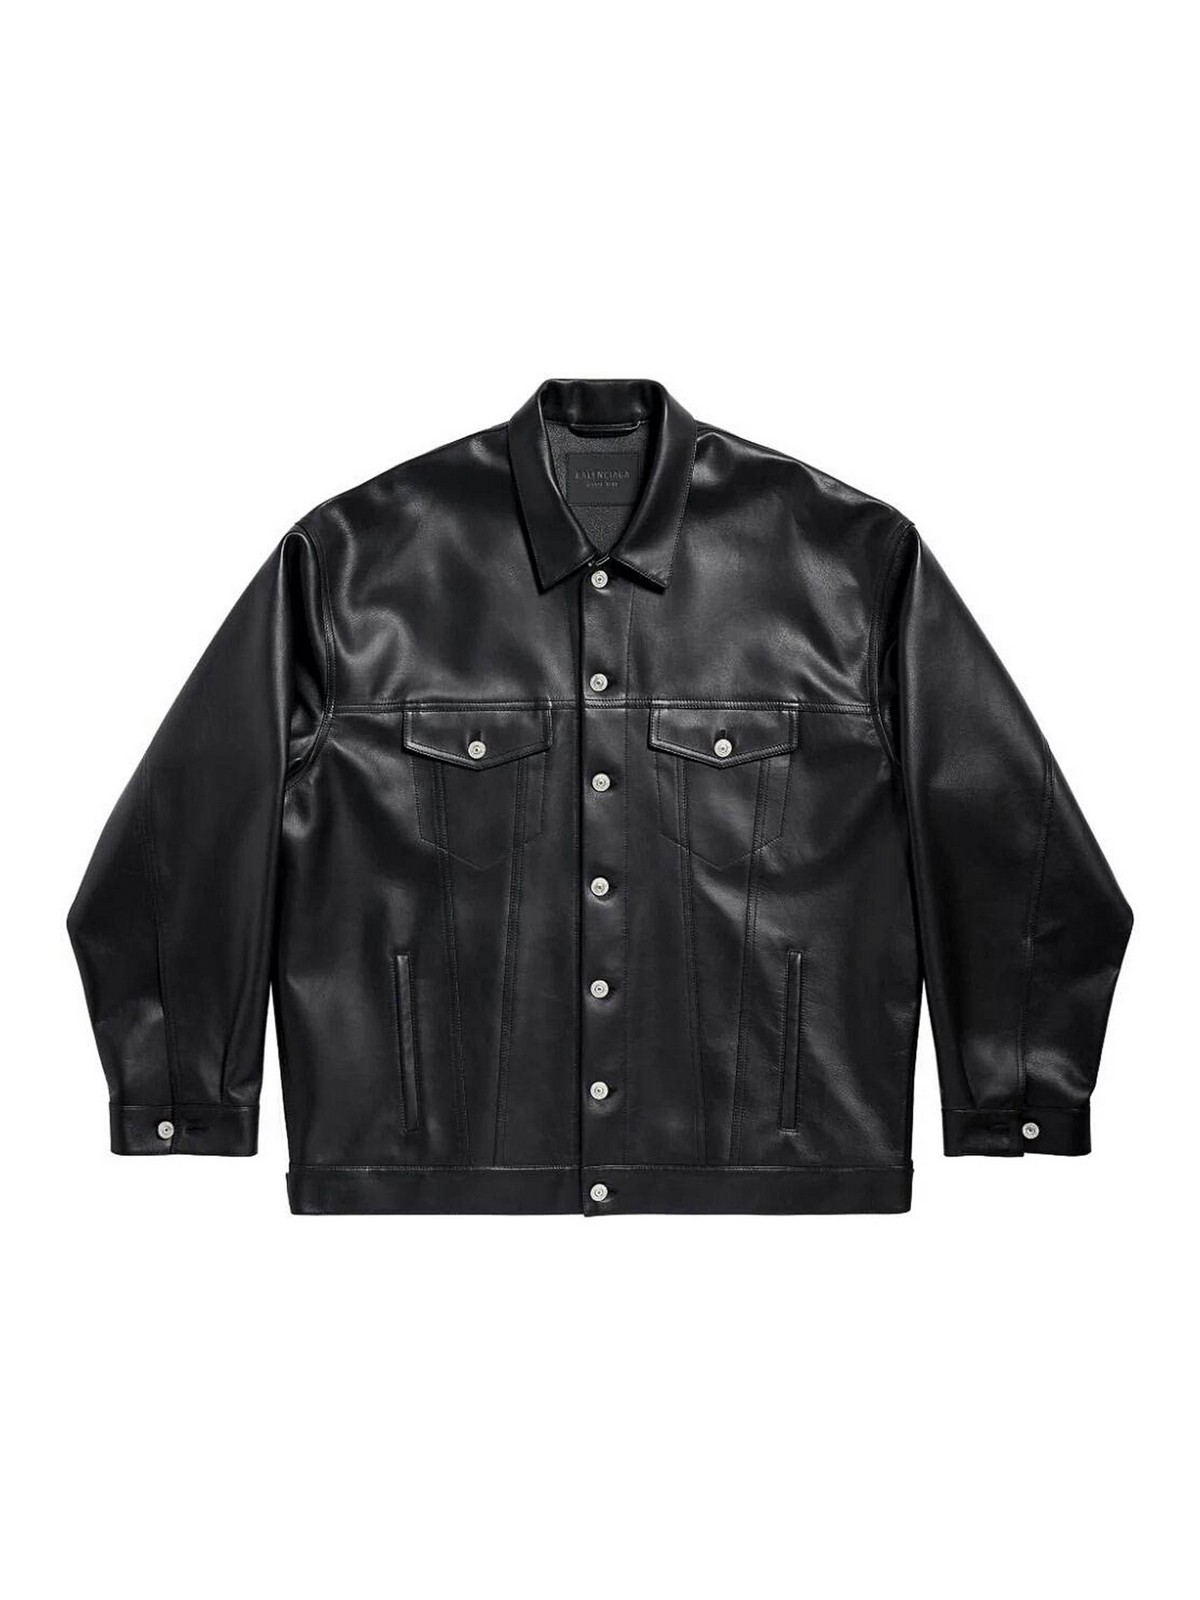 Balenciaga Leather Jacket In Black